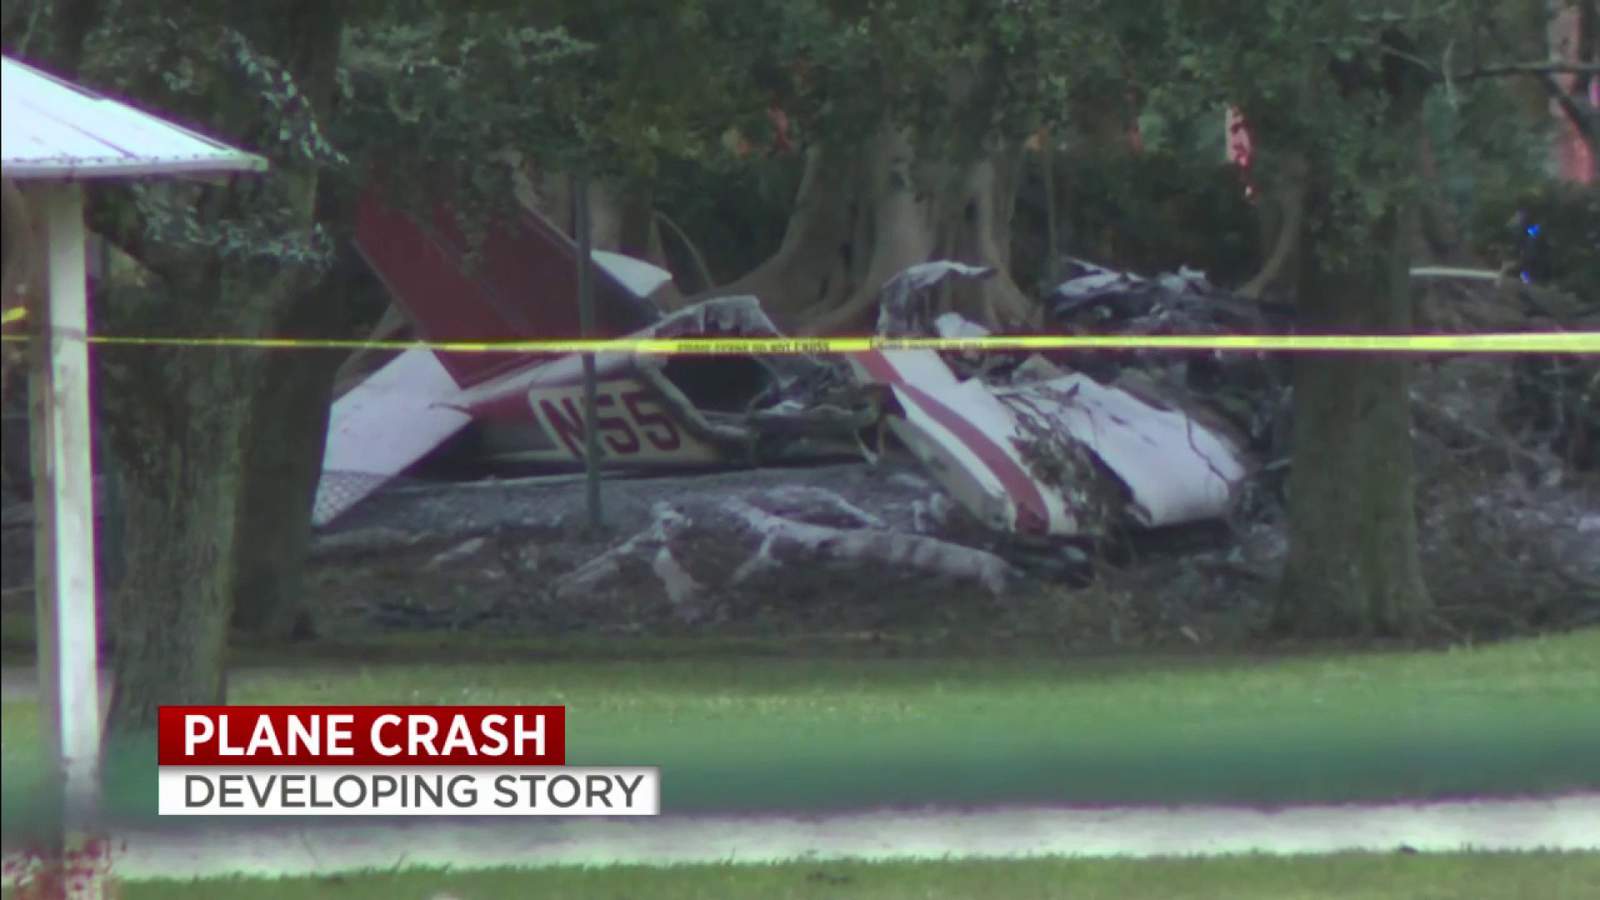 Officer among 4 injured in Broward small plane crash